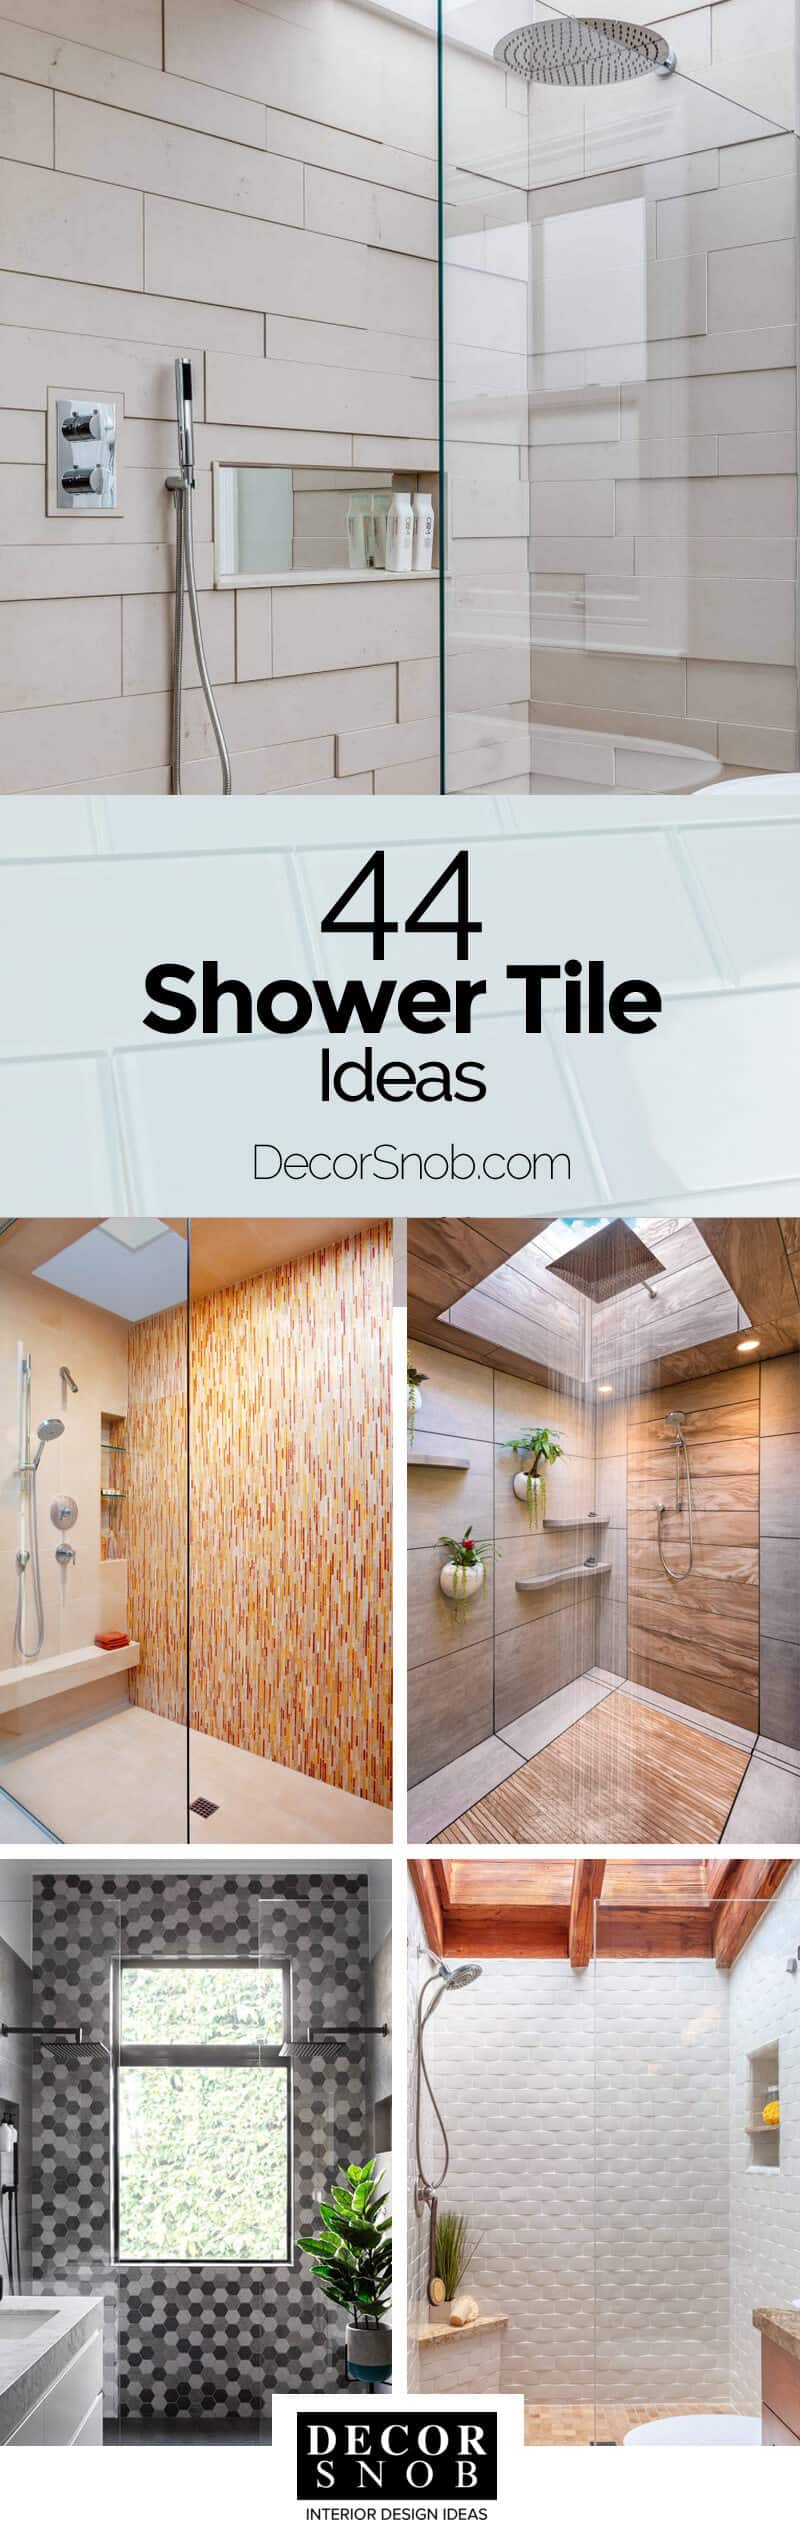 44 Modern Shower Tile Ideas And Designs, Shower Bathtub Tile Ideas